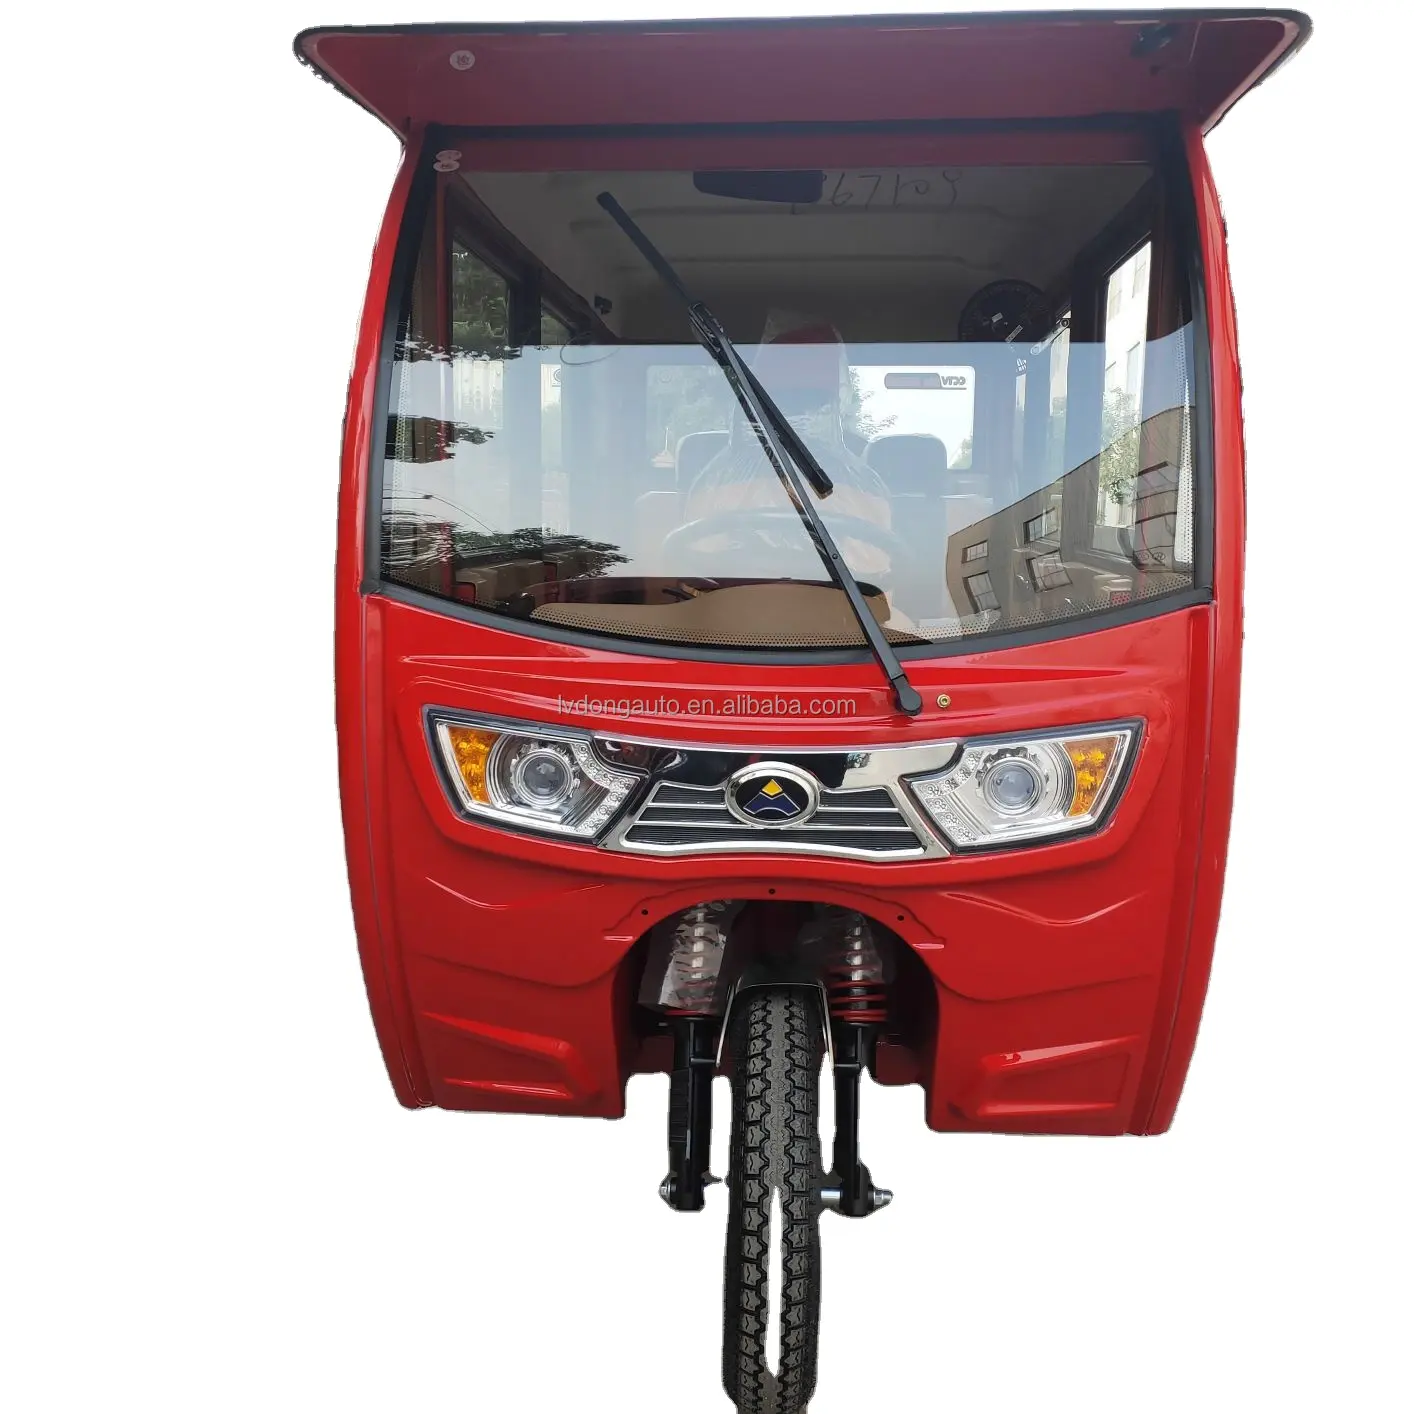 2021 Motor taxi und Bajaj sind gute Qualität Auto Tuk Tuk auf dem Elektro-Dreirad-Auto markt